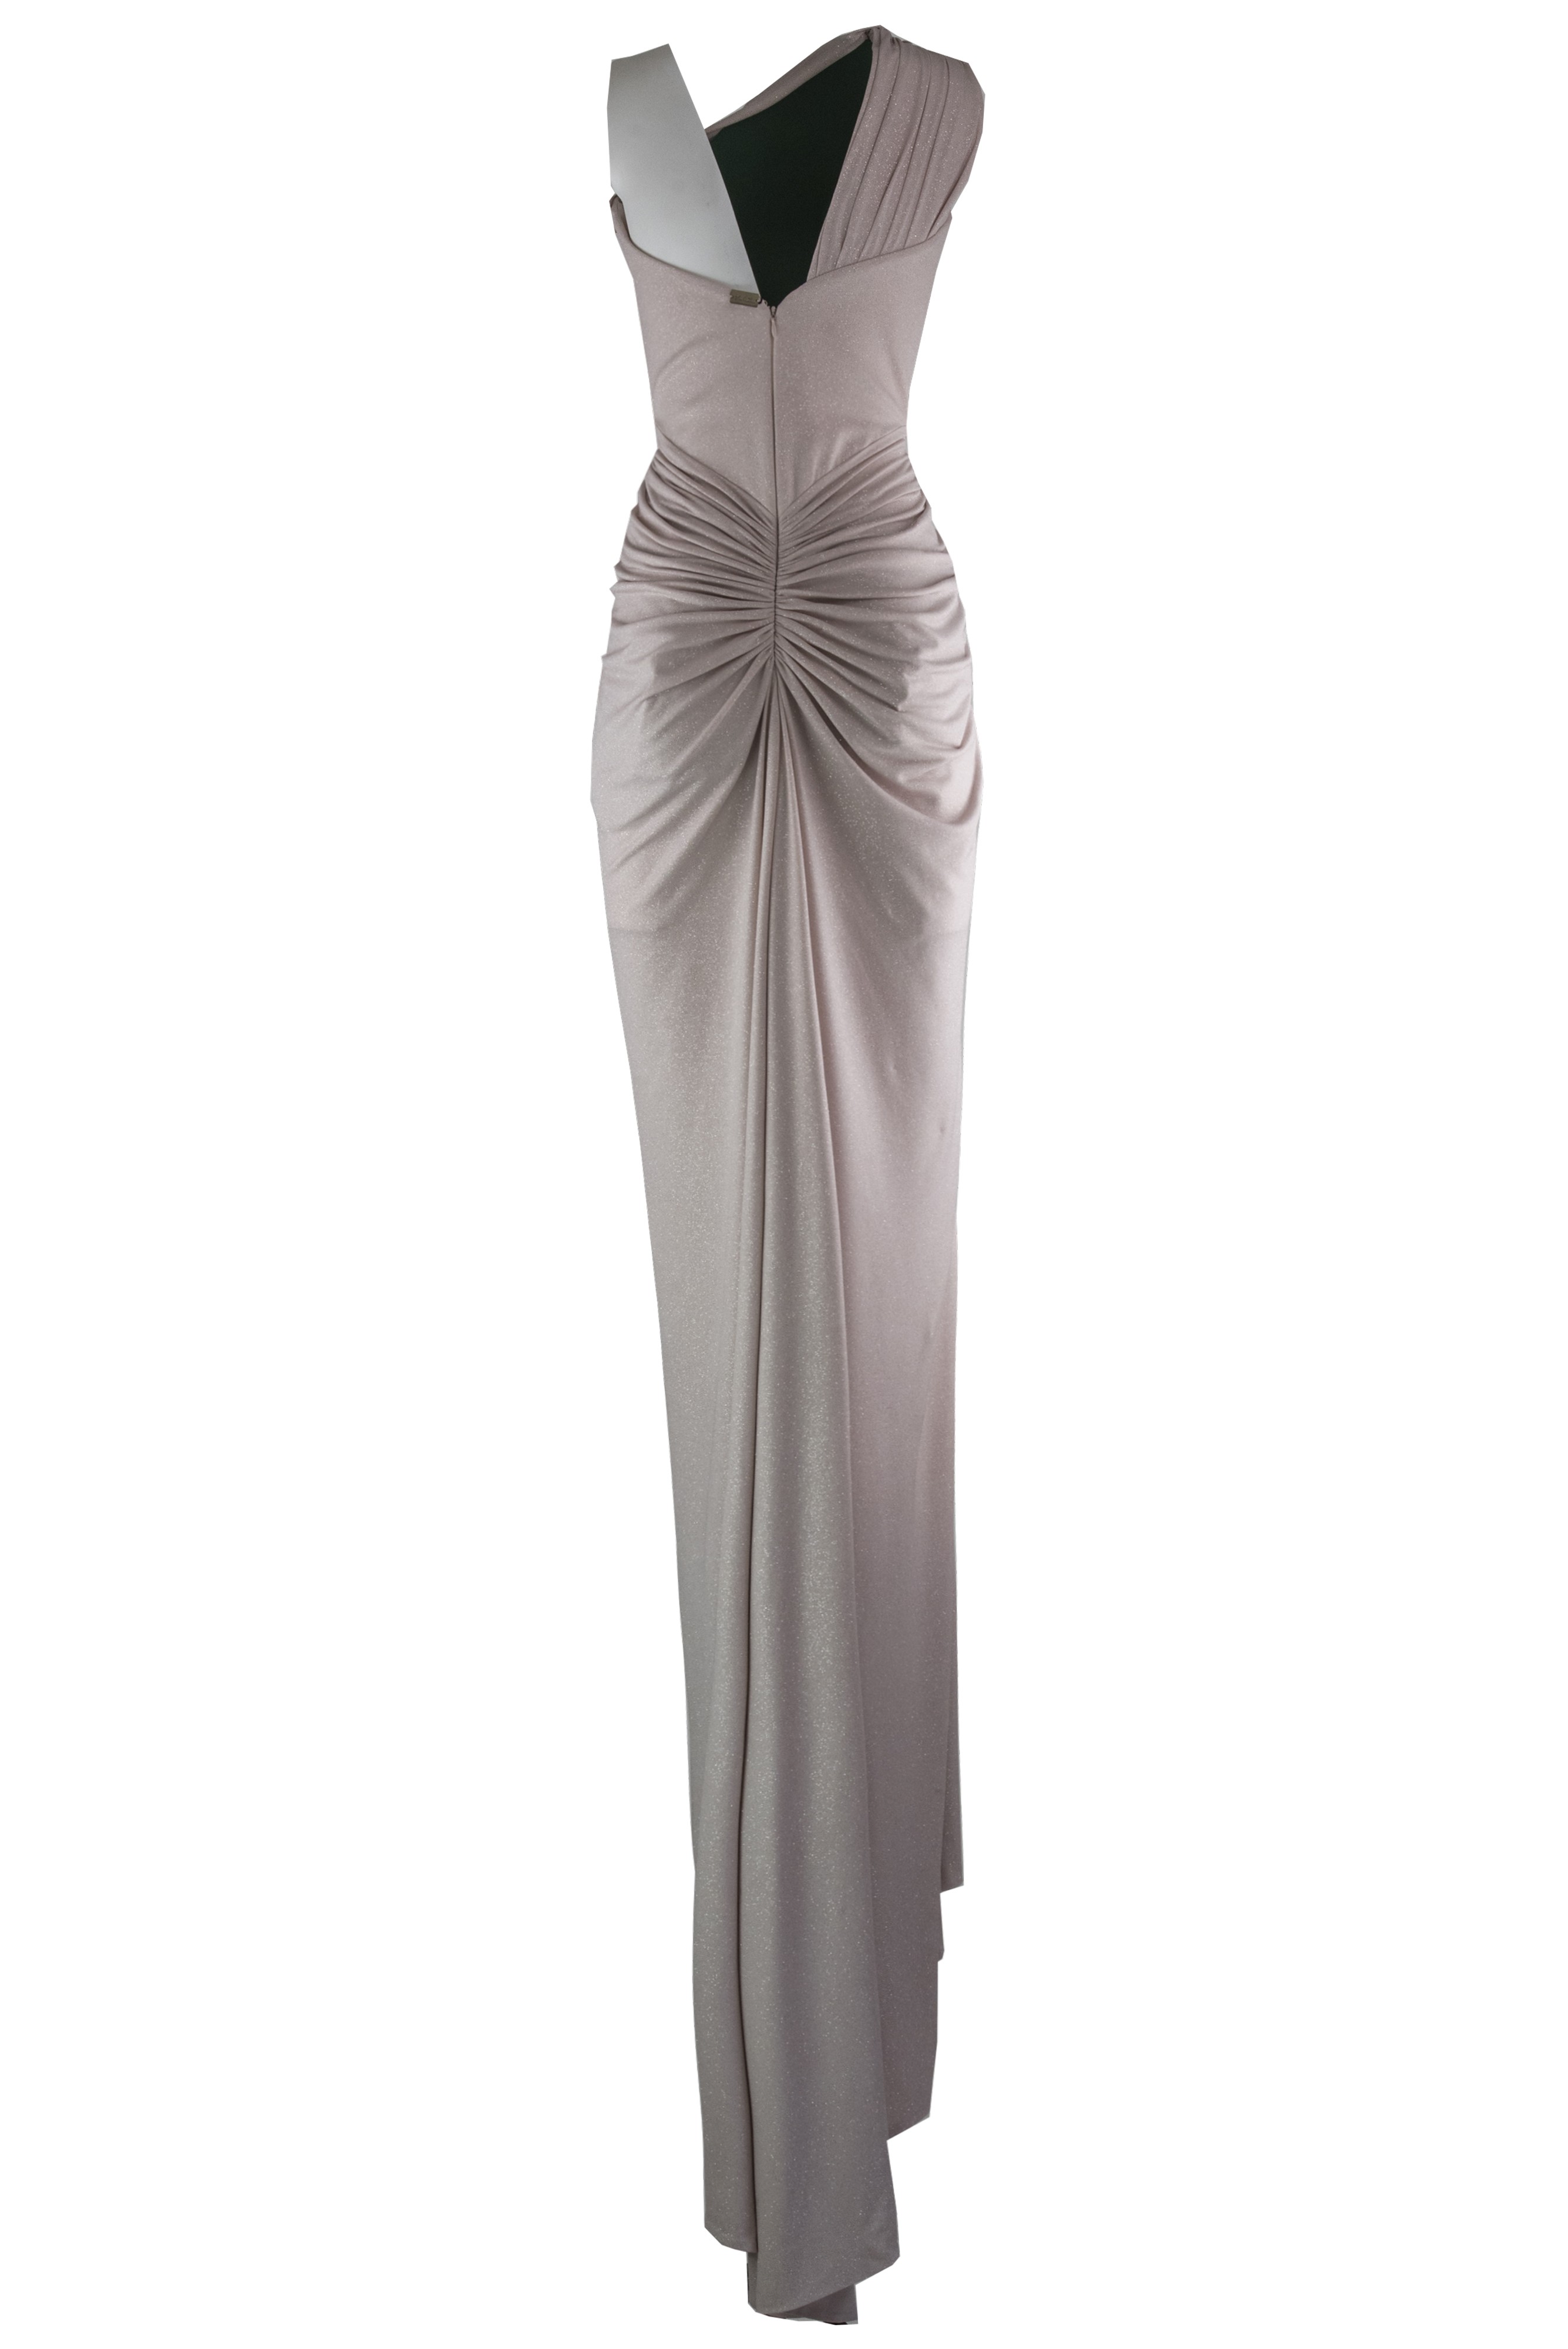 Rhea Costa Dress 20107D LG - New Season Spring Summer 2020